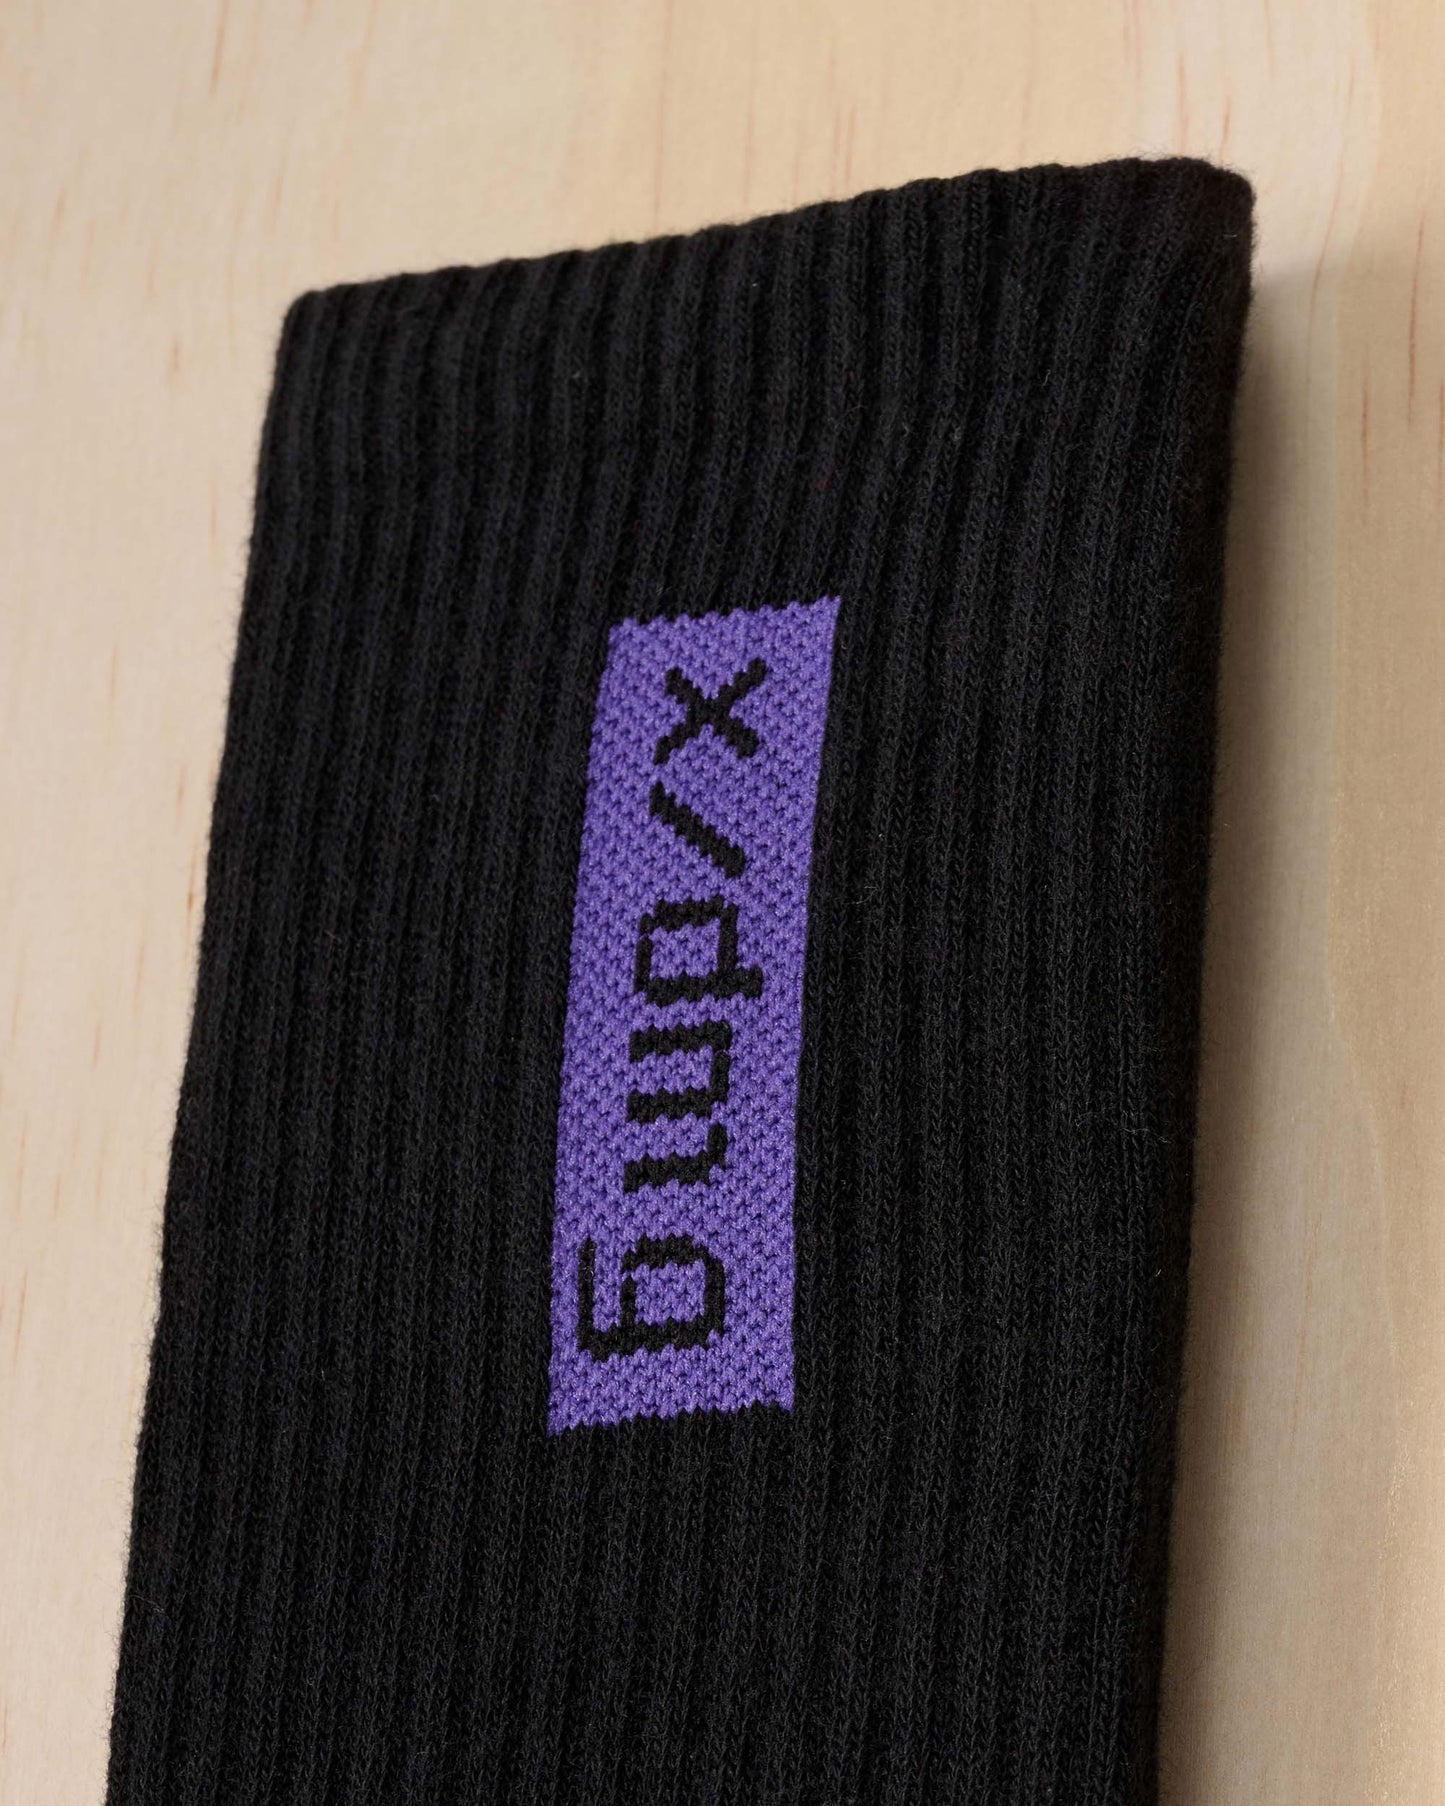 XDMG Socks (size 7-12) 4's